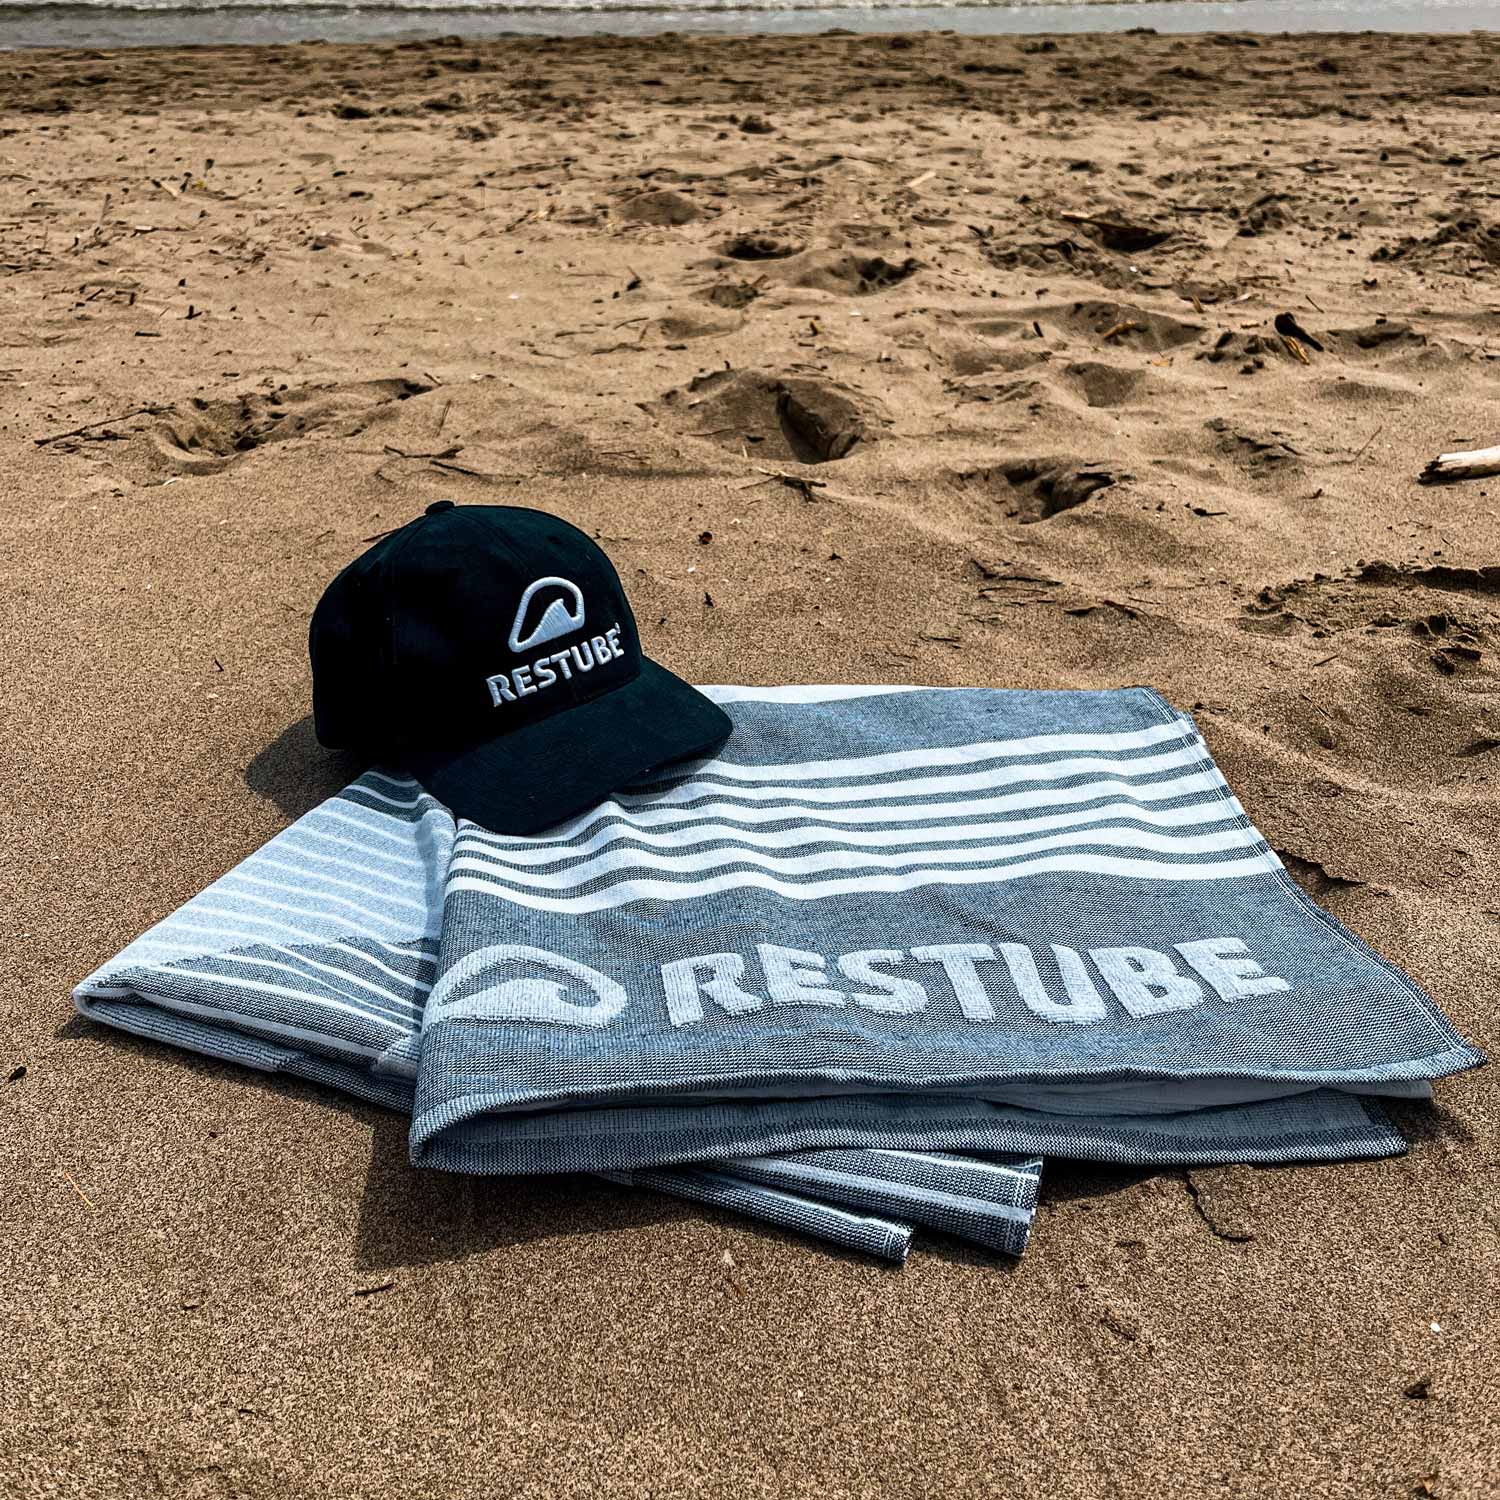 Beach towel by RESTUBE